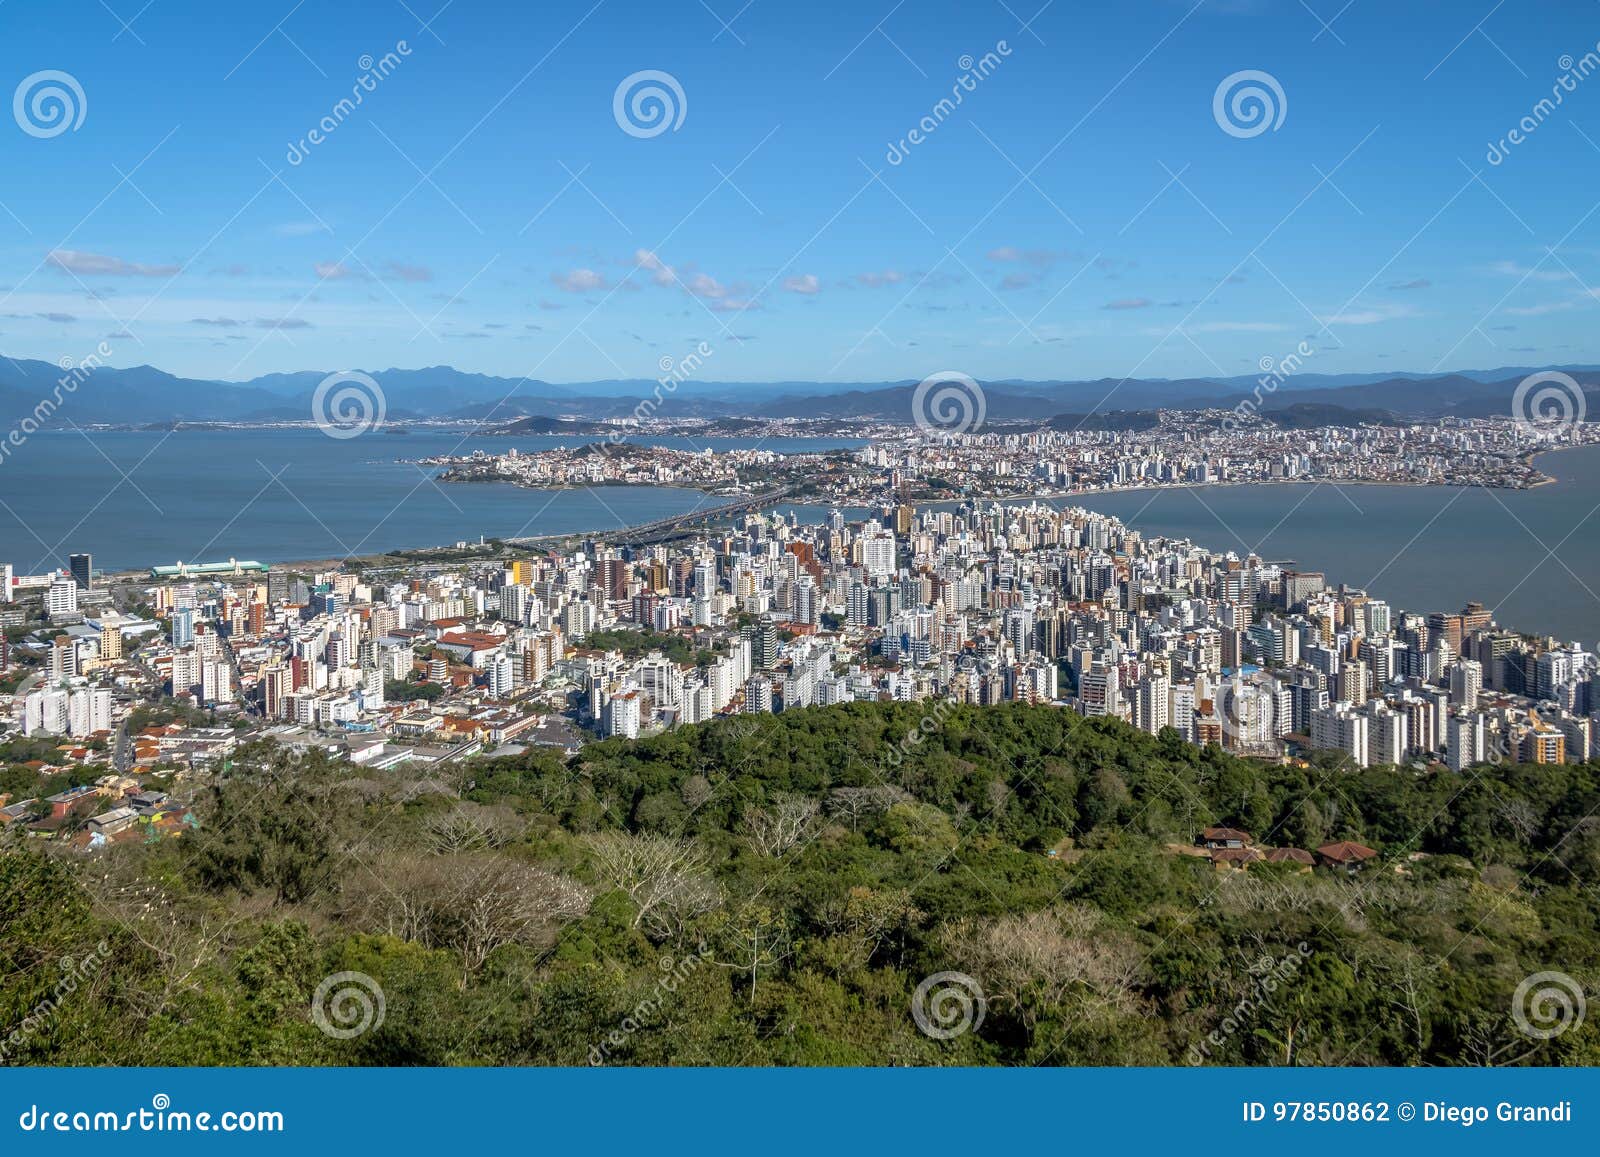 aerial view of dowtown florianopolis city - florianopolis, santa catarina, brazil